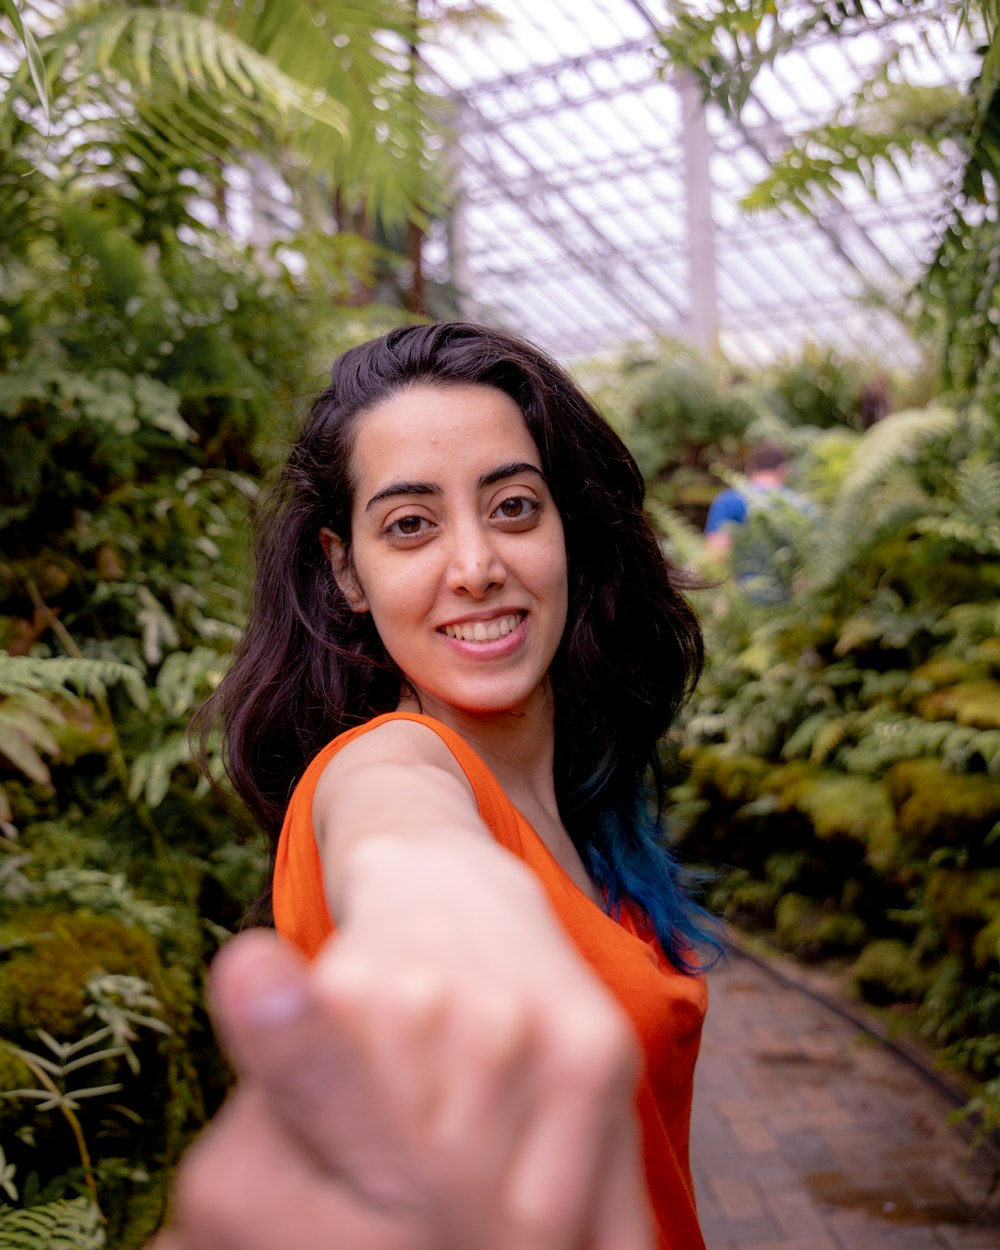 woman wearing orange sleeveless top standing in greenhouse